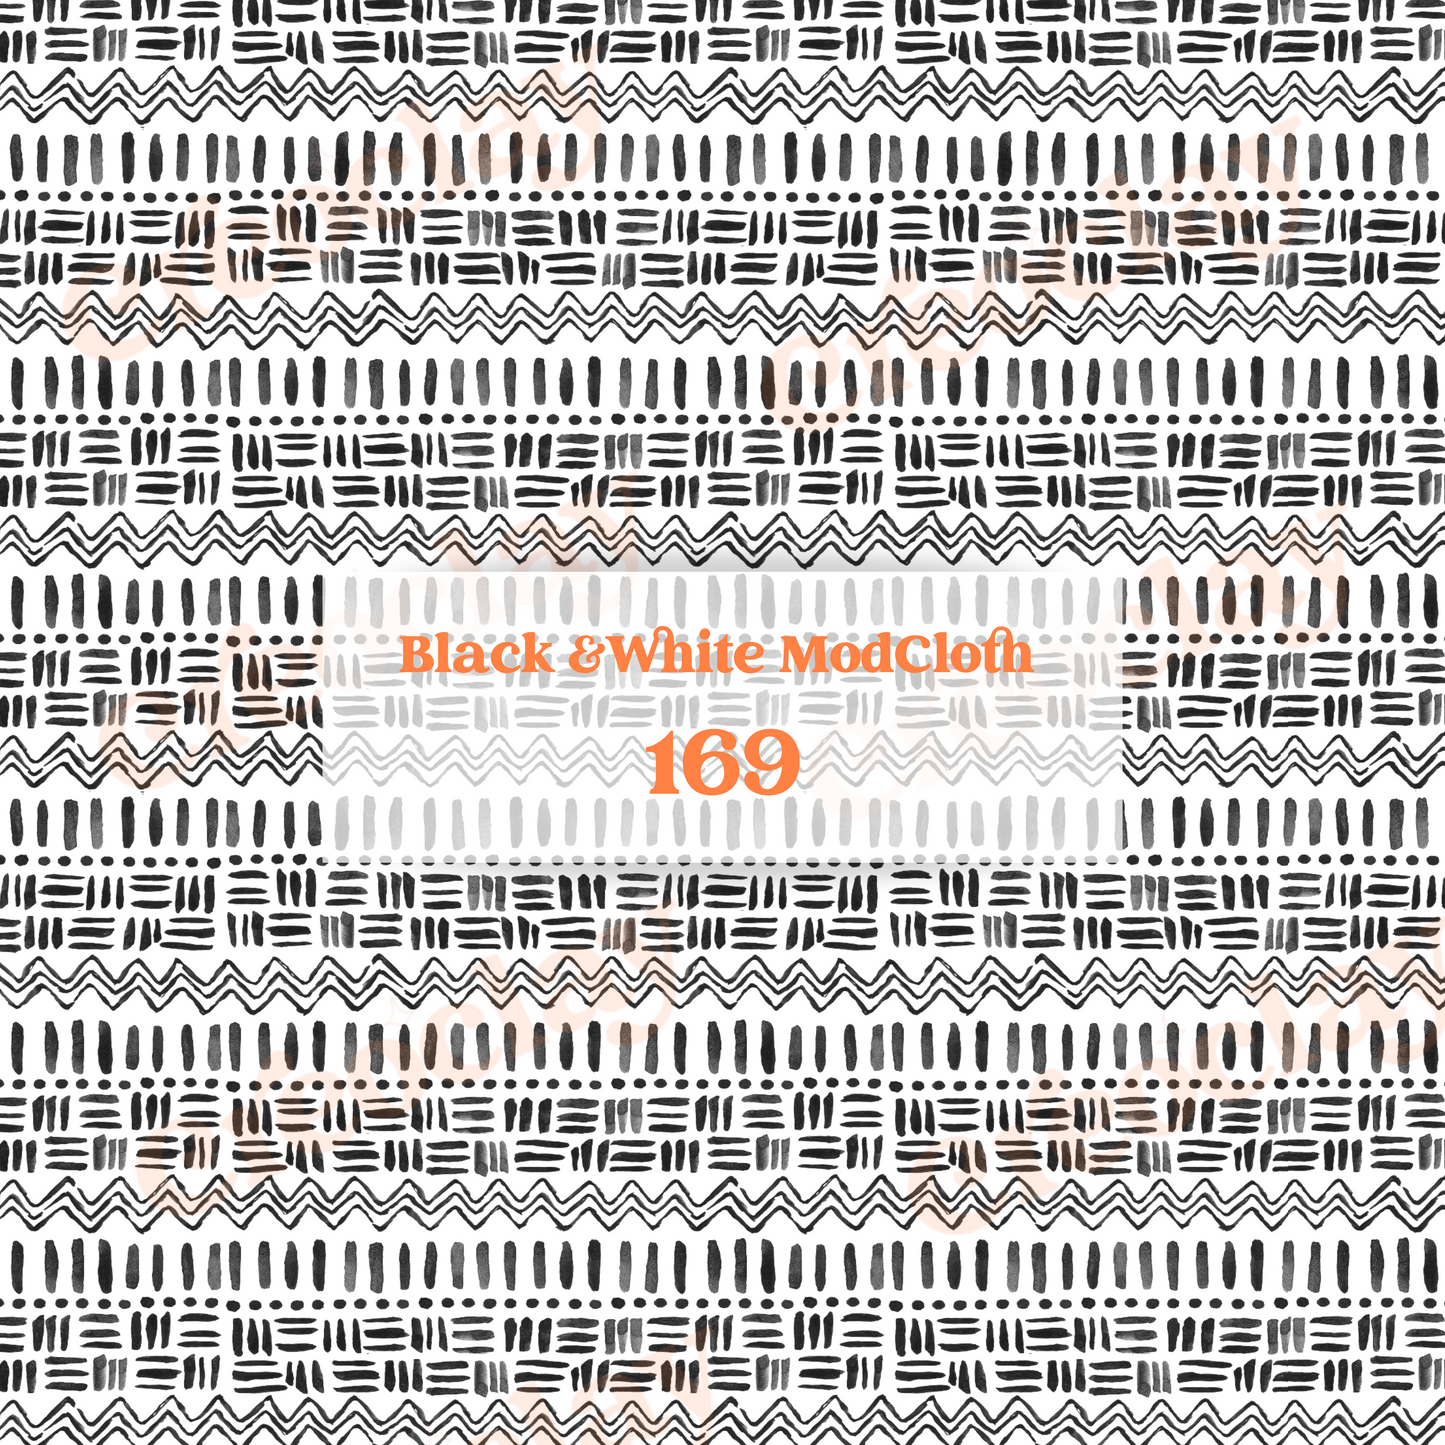 Transfer Paper 169 (Black & White MudCloth)